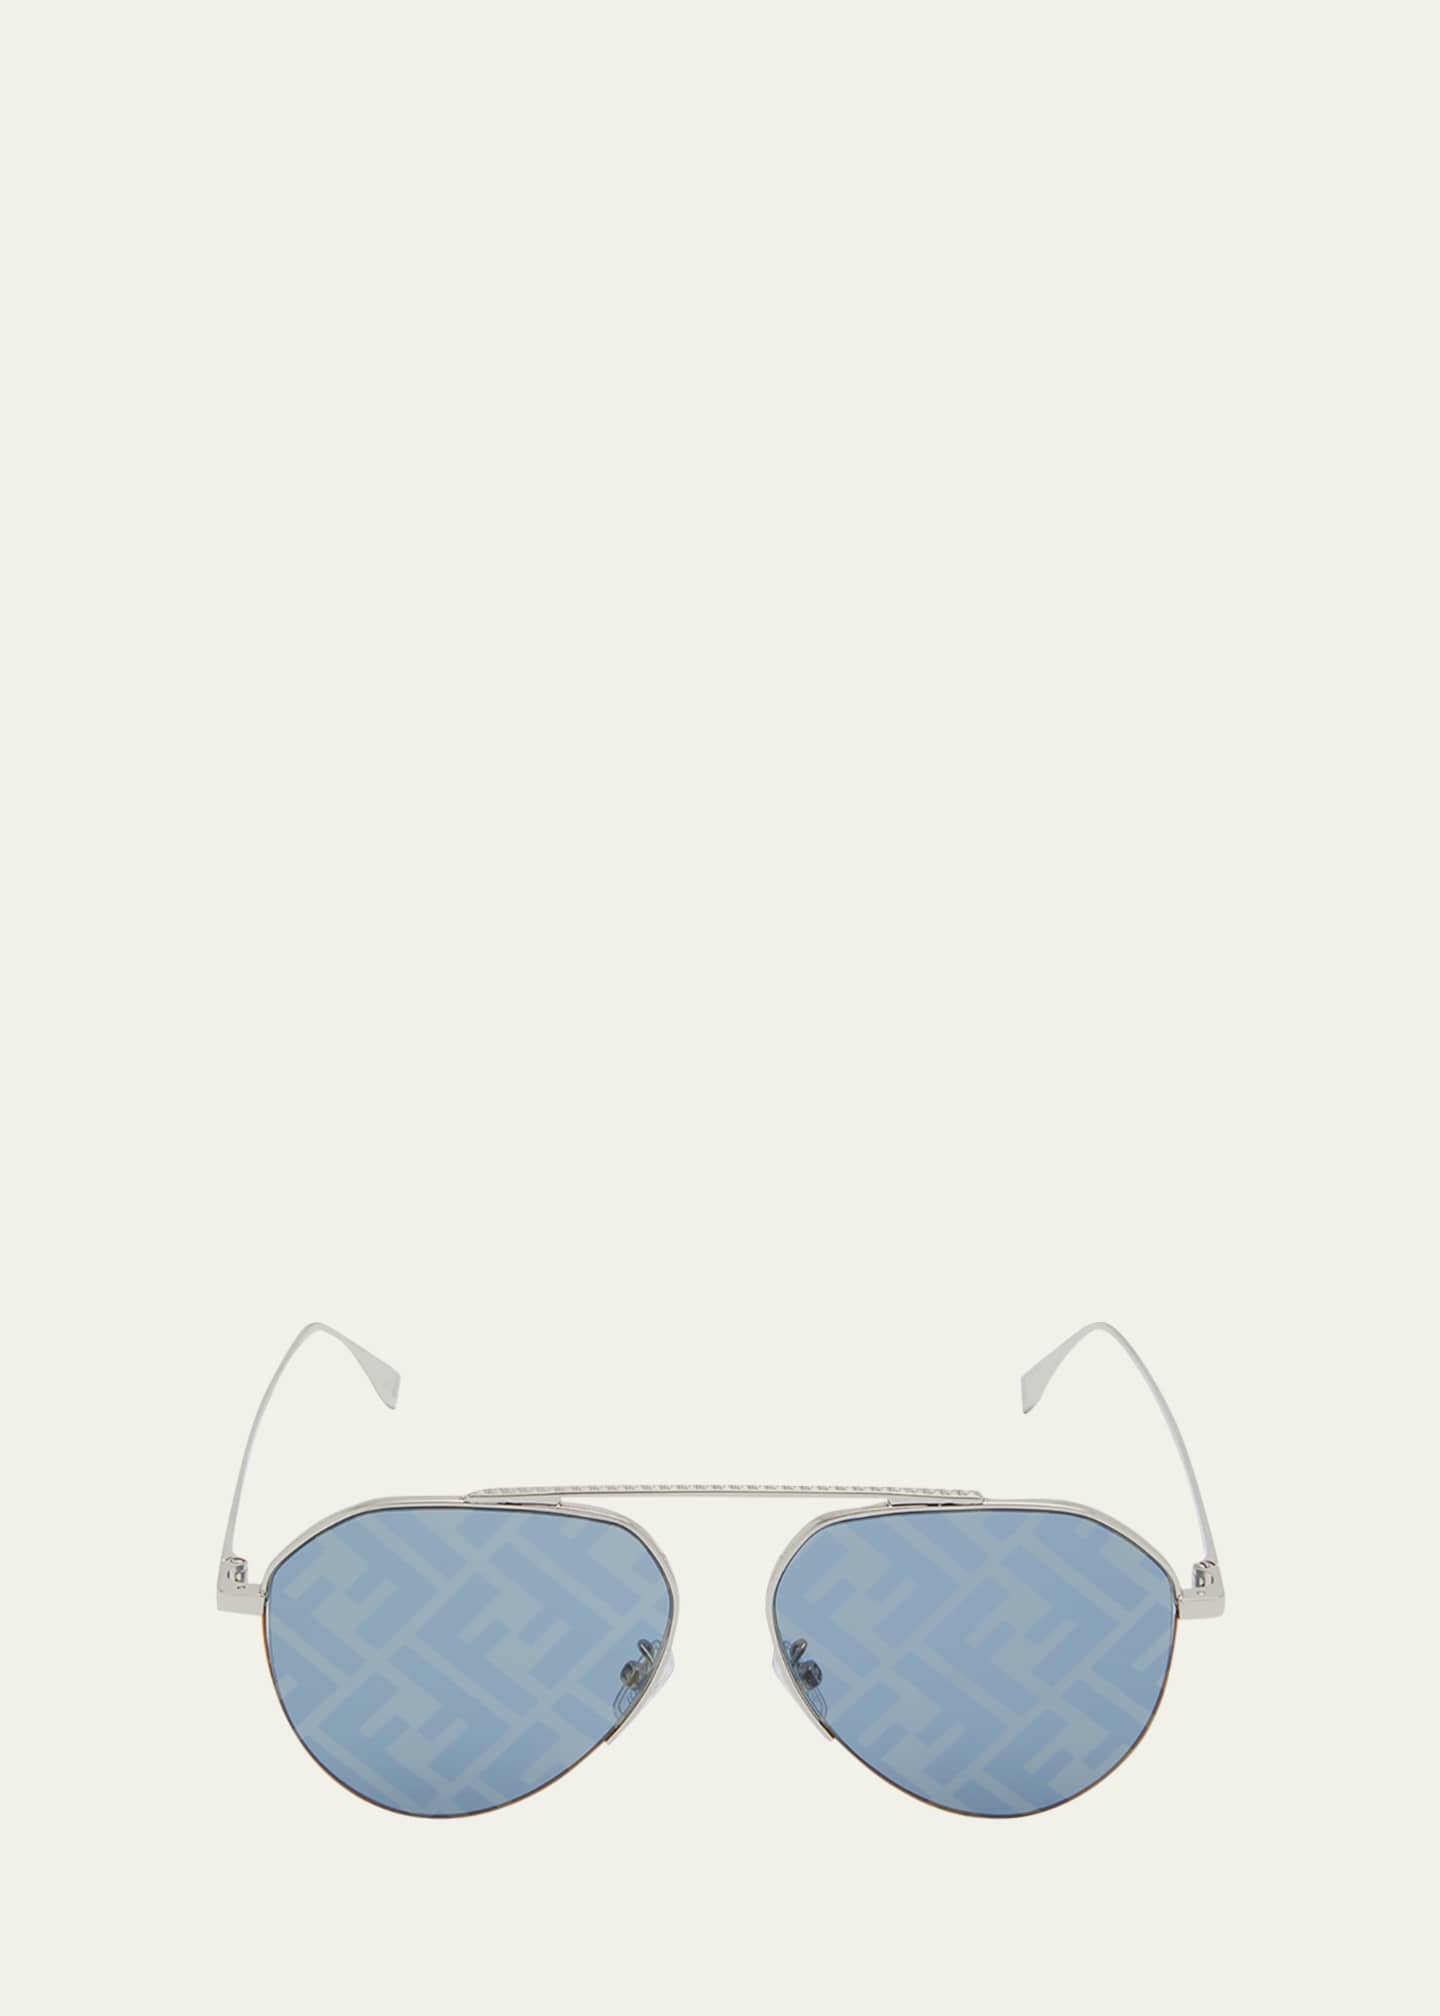 Fendi Men's Blue Metal Sunglasses